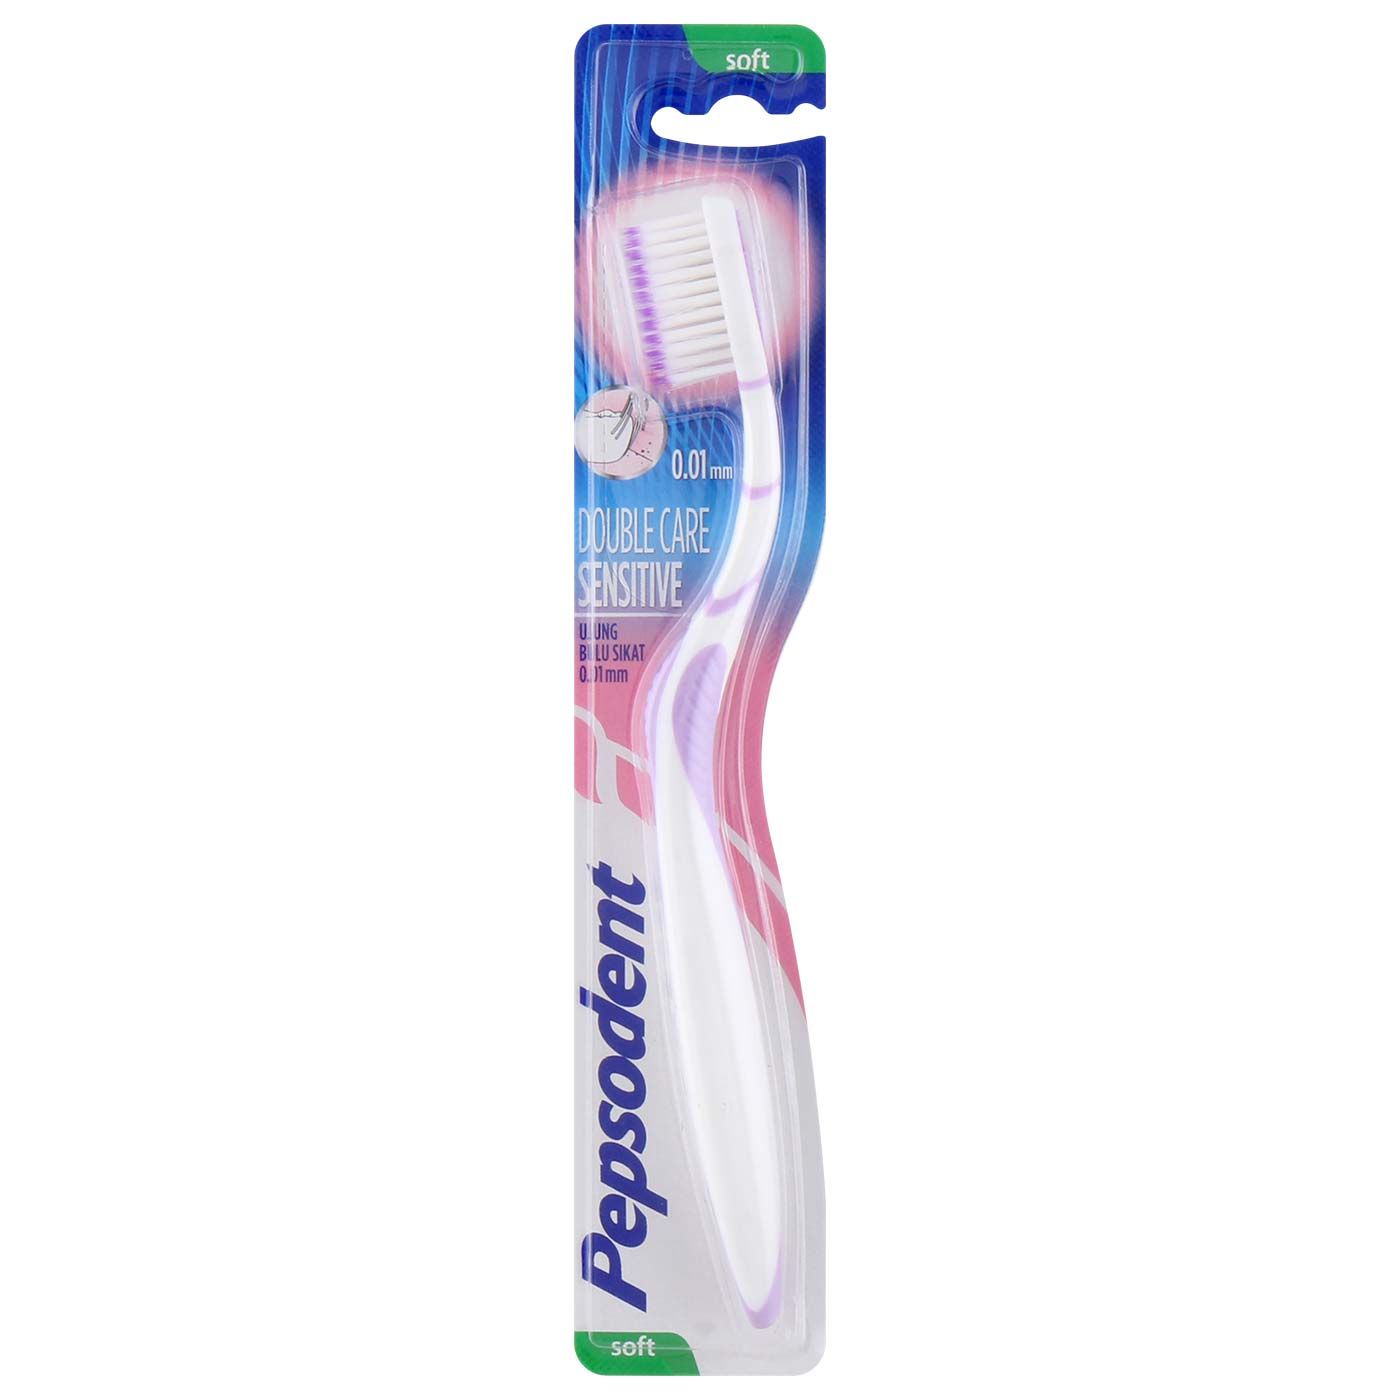 Pepsodent Tooth Brush Dbl Care Sensitif Soft Purple - 1